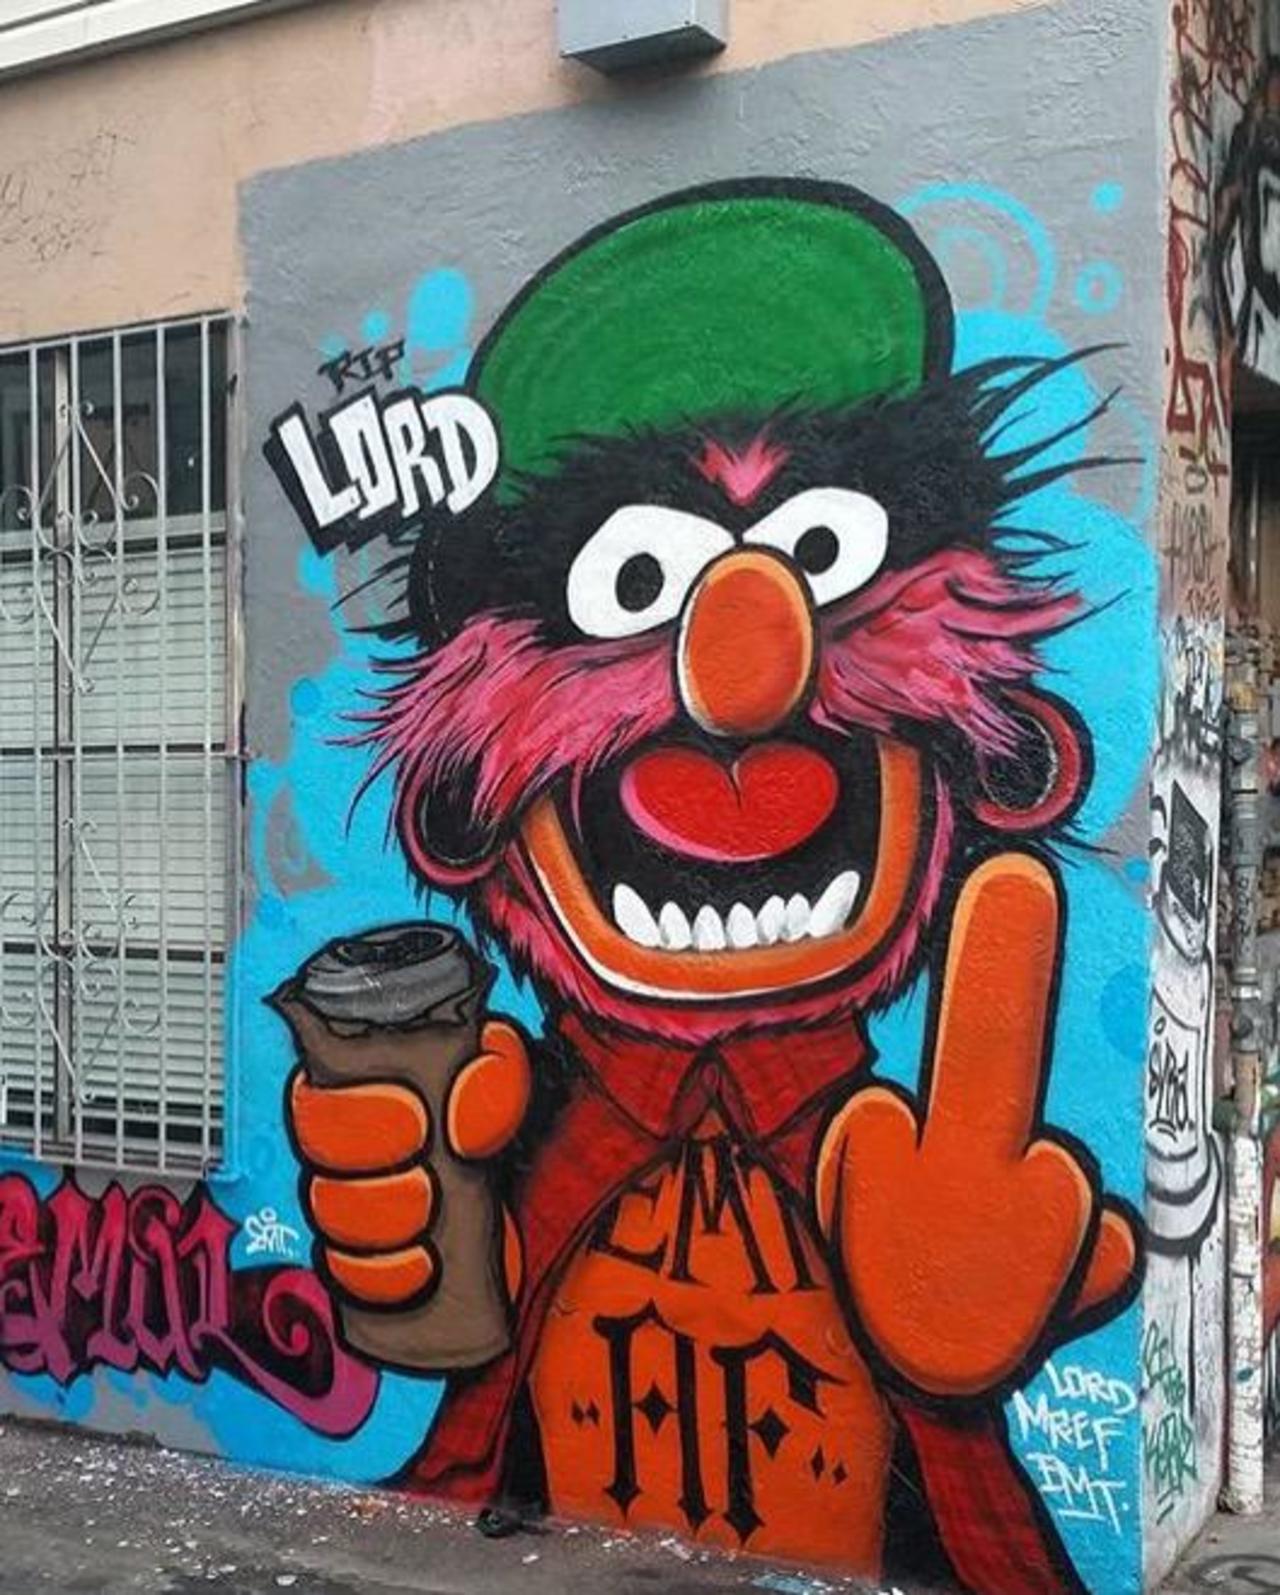 RT @GoogleStreetArt: Animal
Street Art by Lords Crew 

#art #arte #graffiti #streetart http://t.co/qqBXyhSFqG